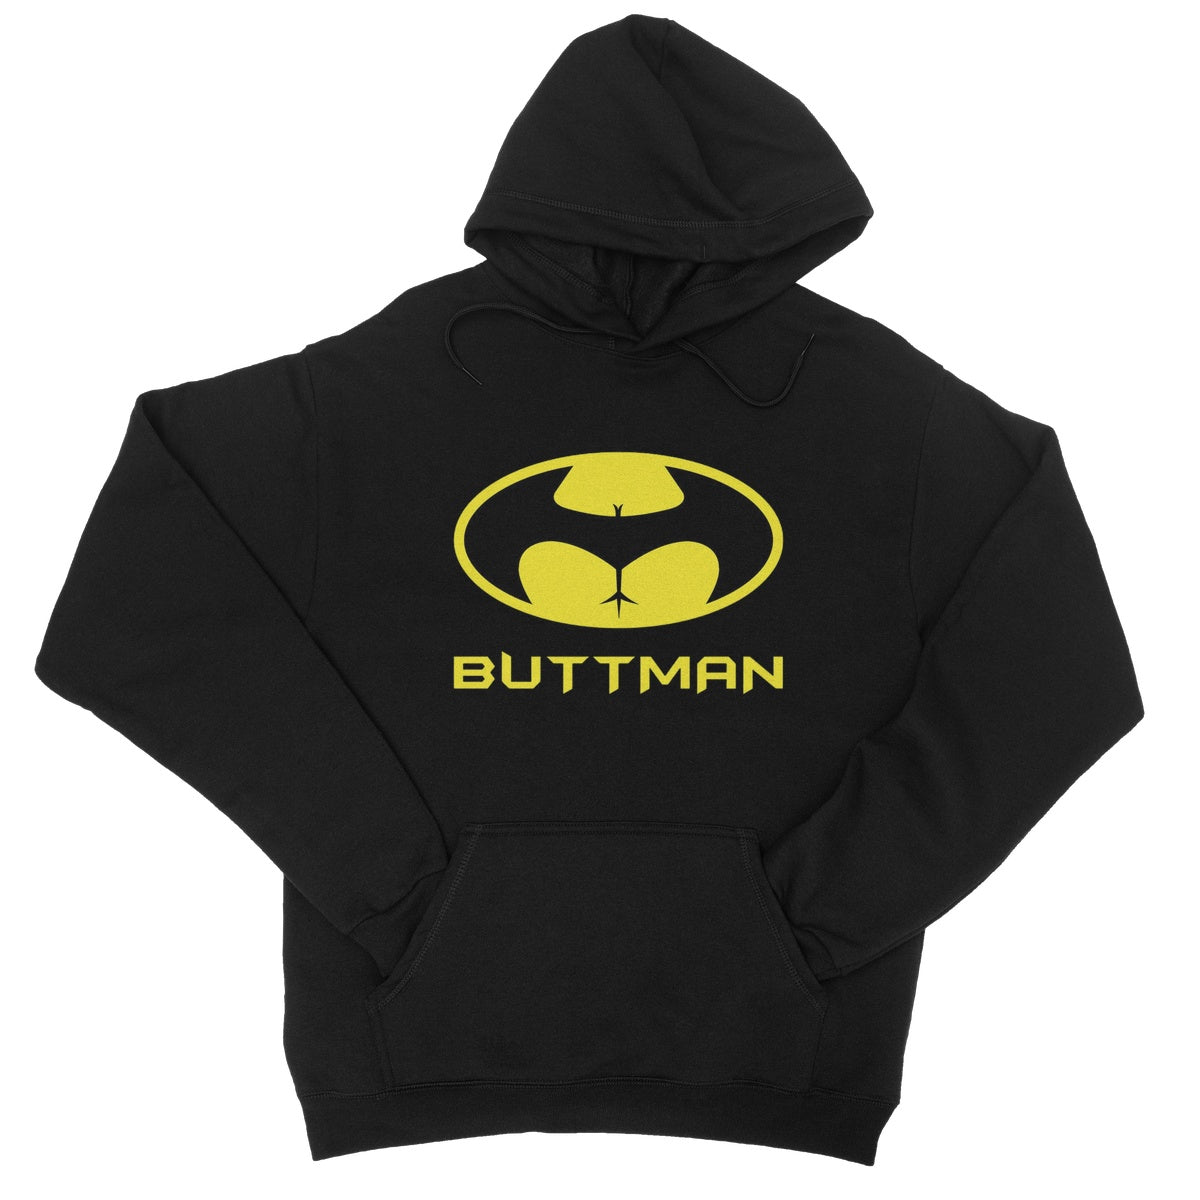 buttman hoodie black